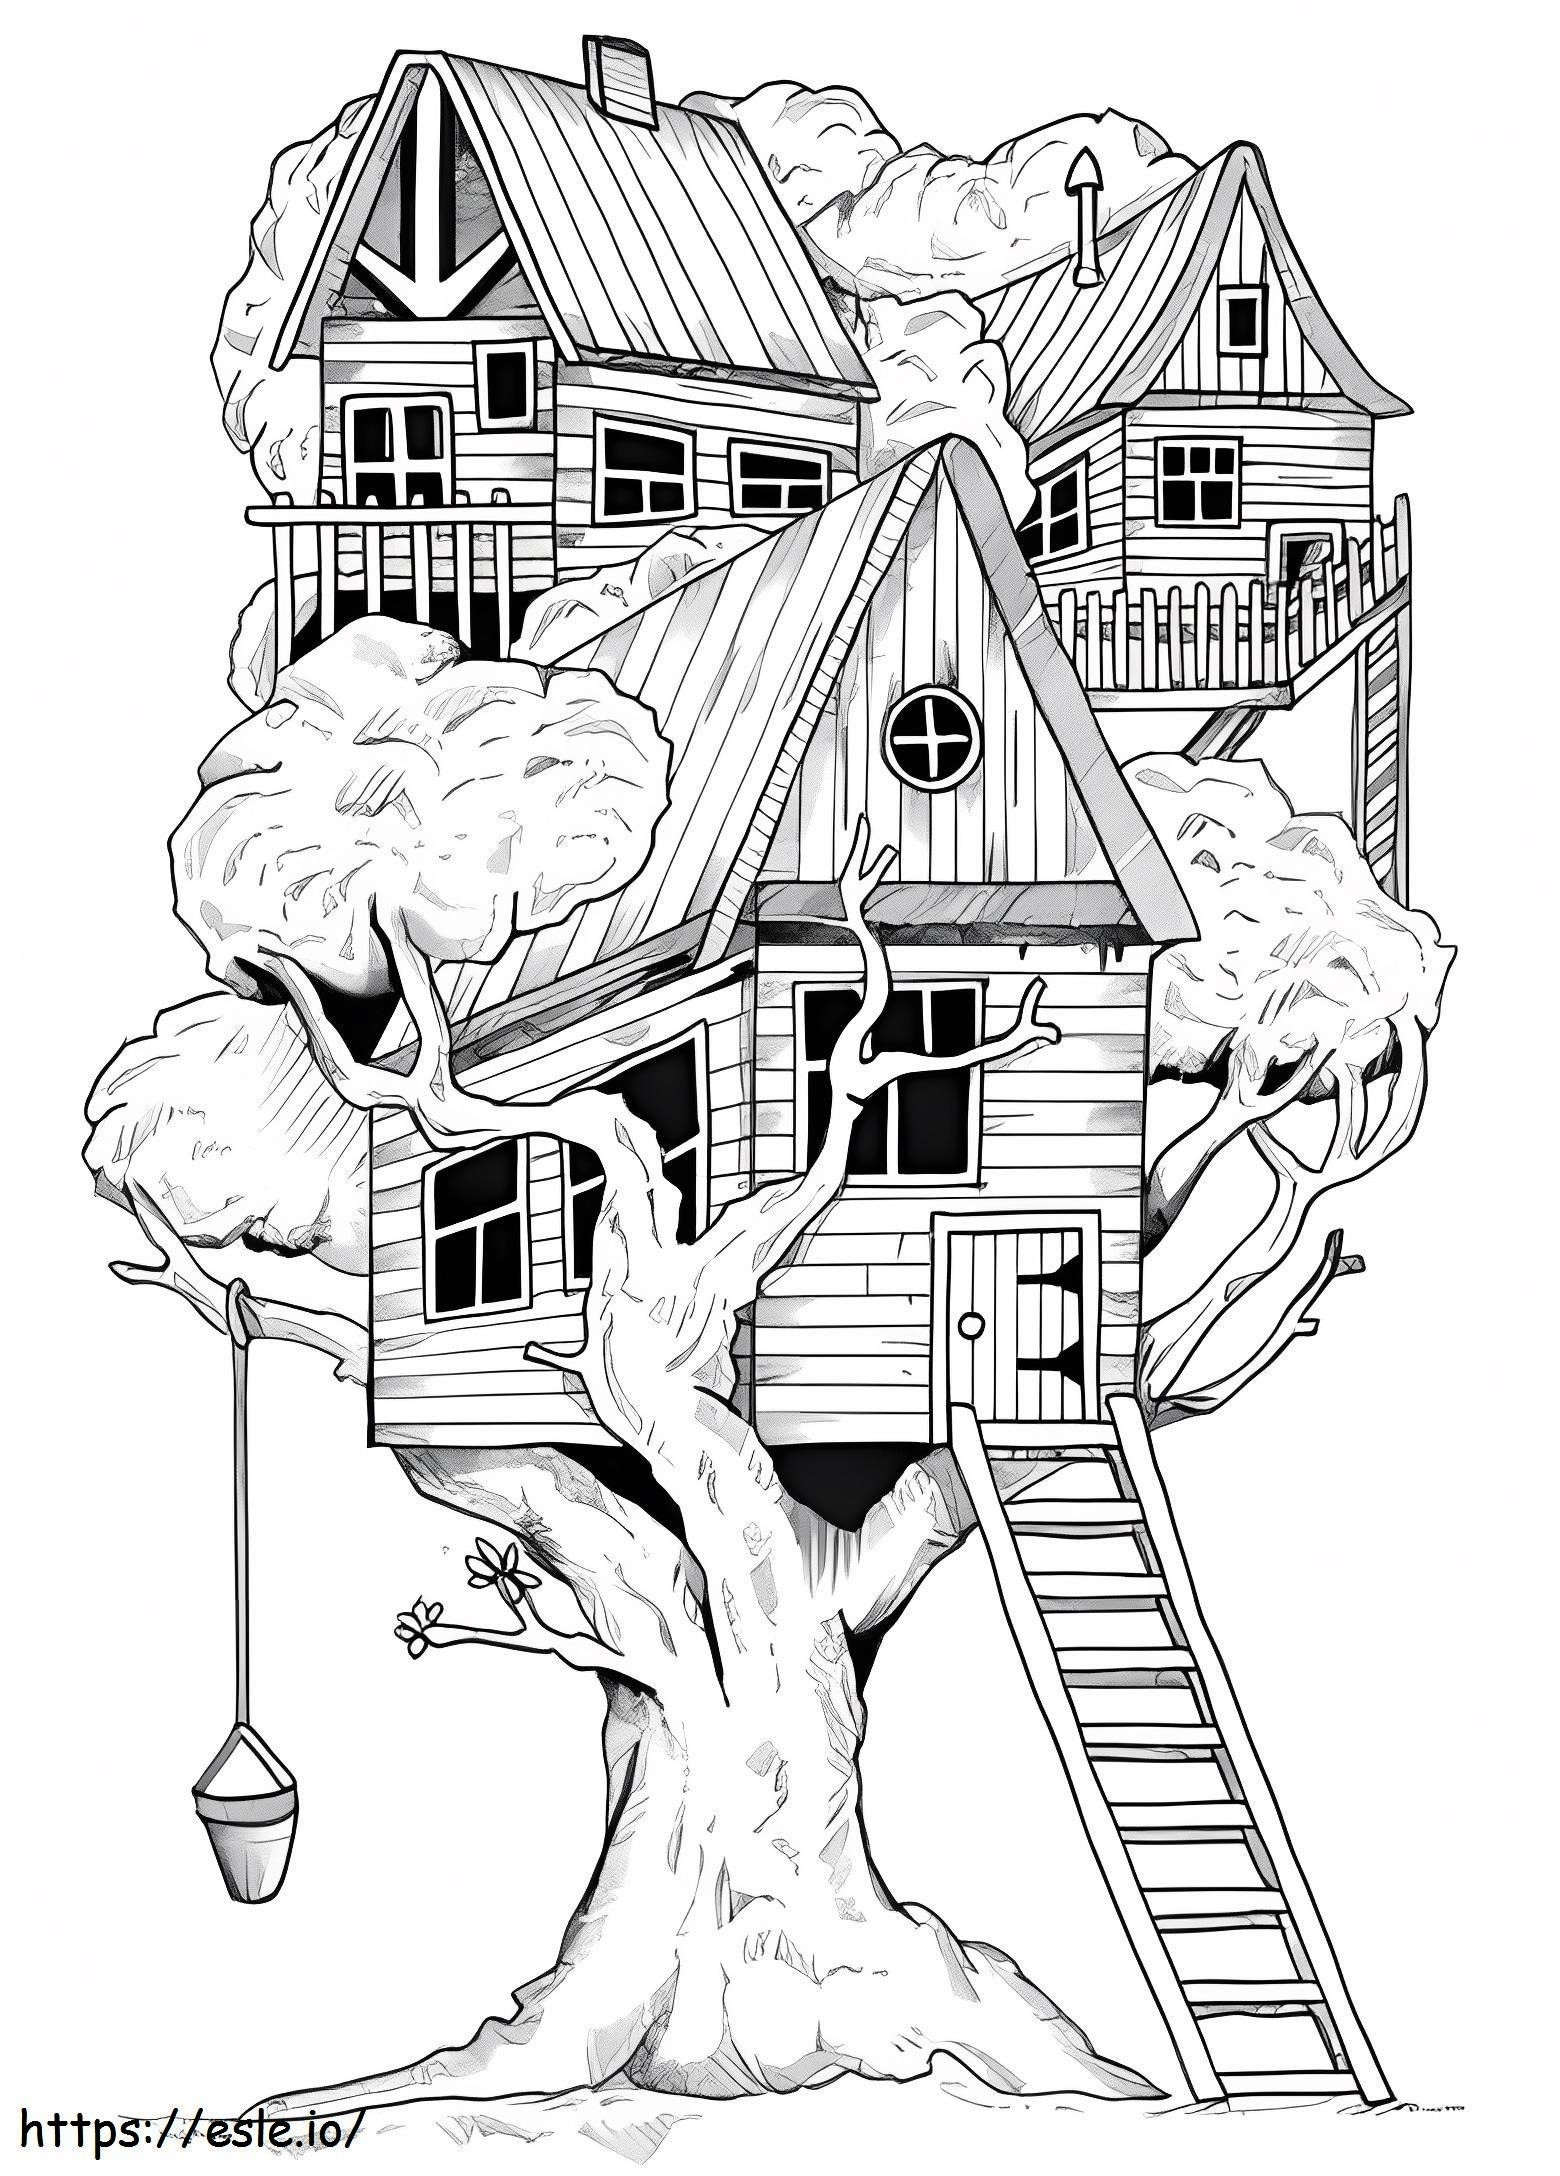 Perili Ağaç Ev boyama